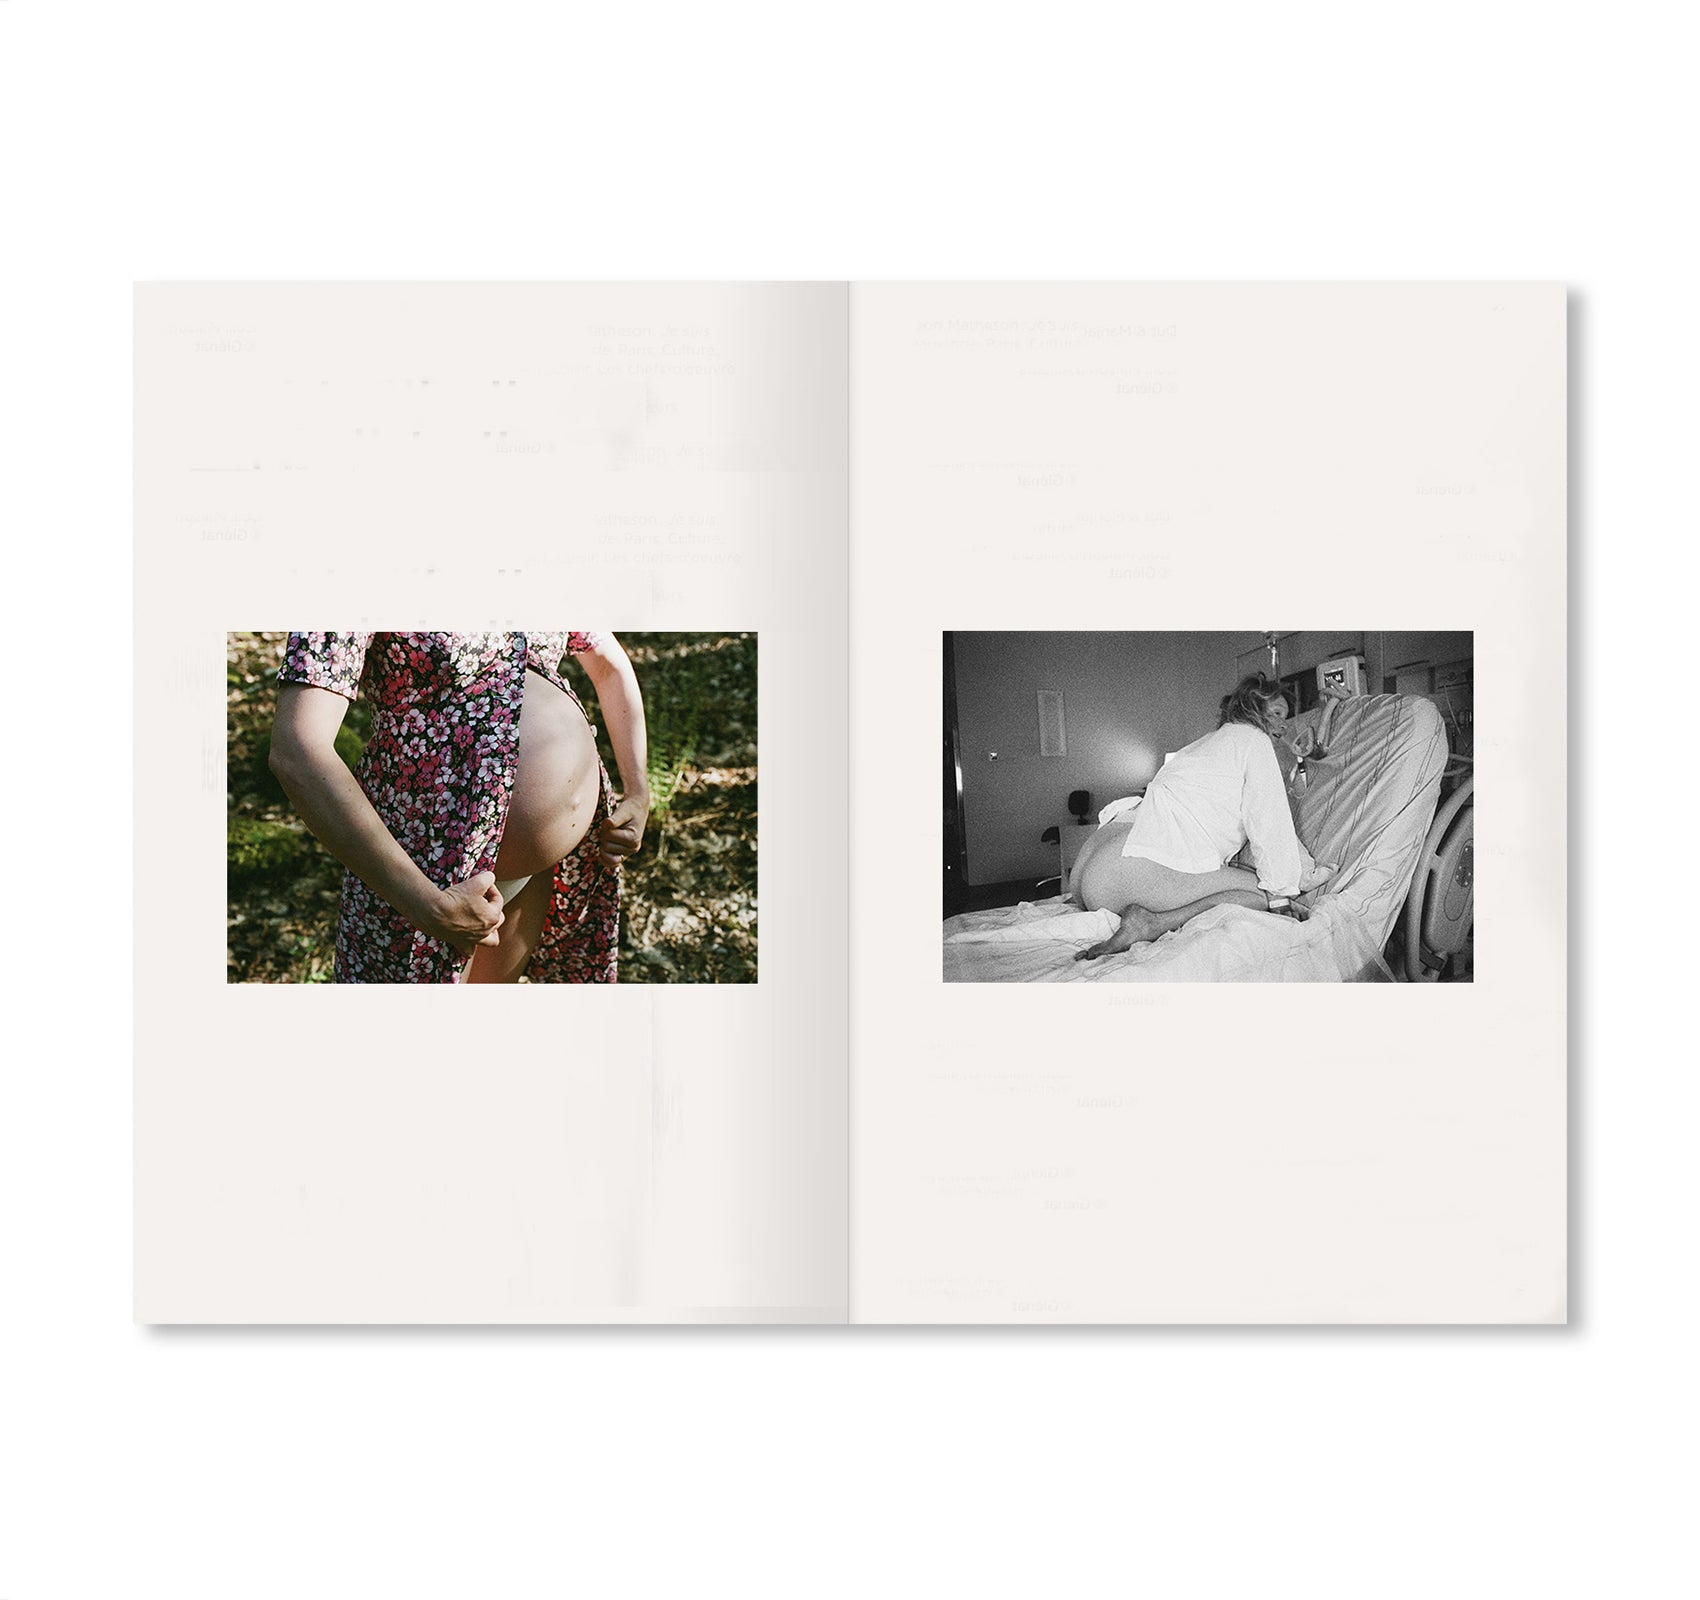 MY PHOTO BOOKS by Lina Scheynius